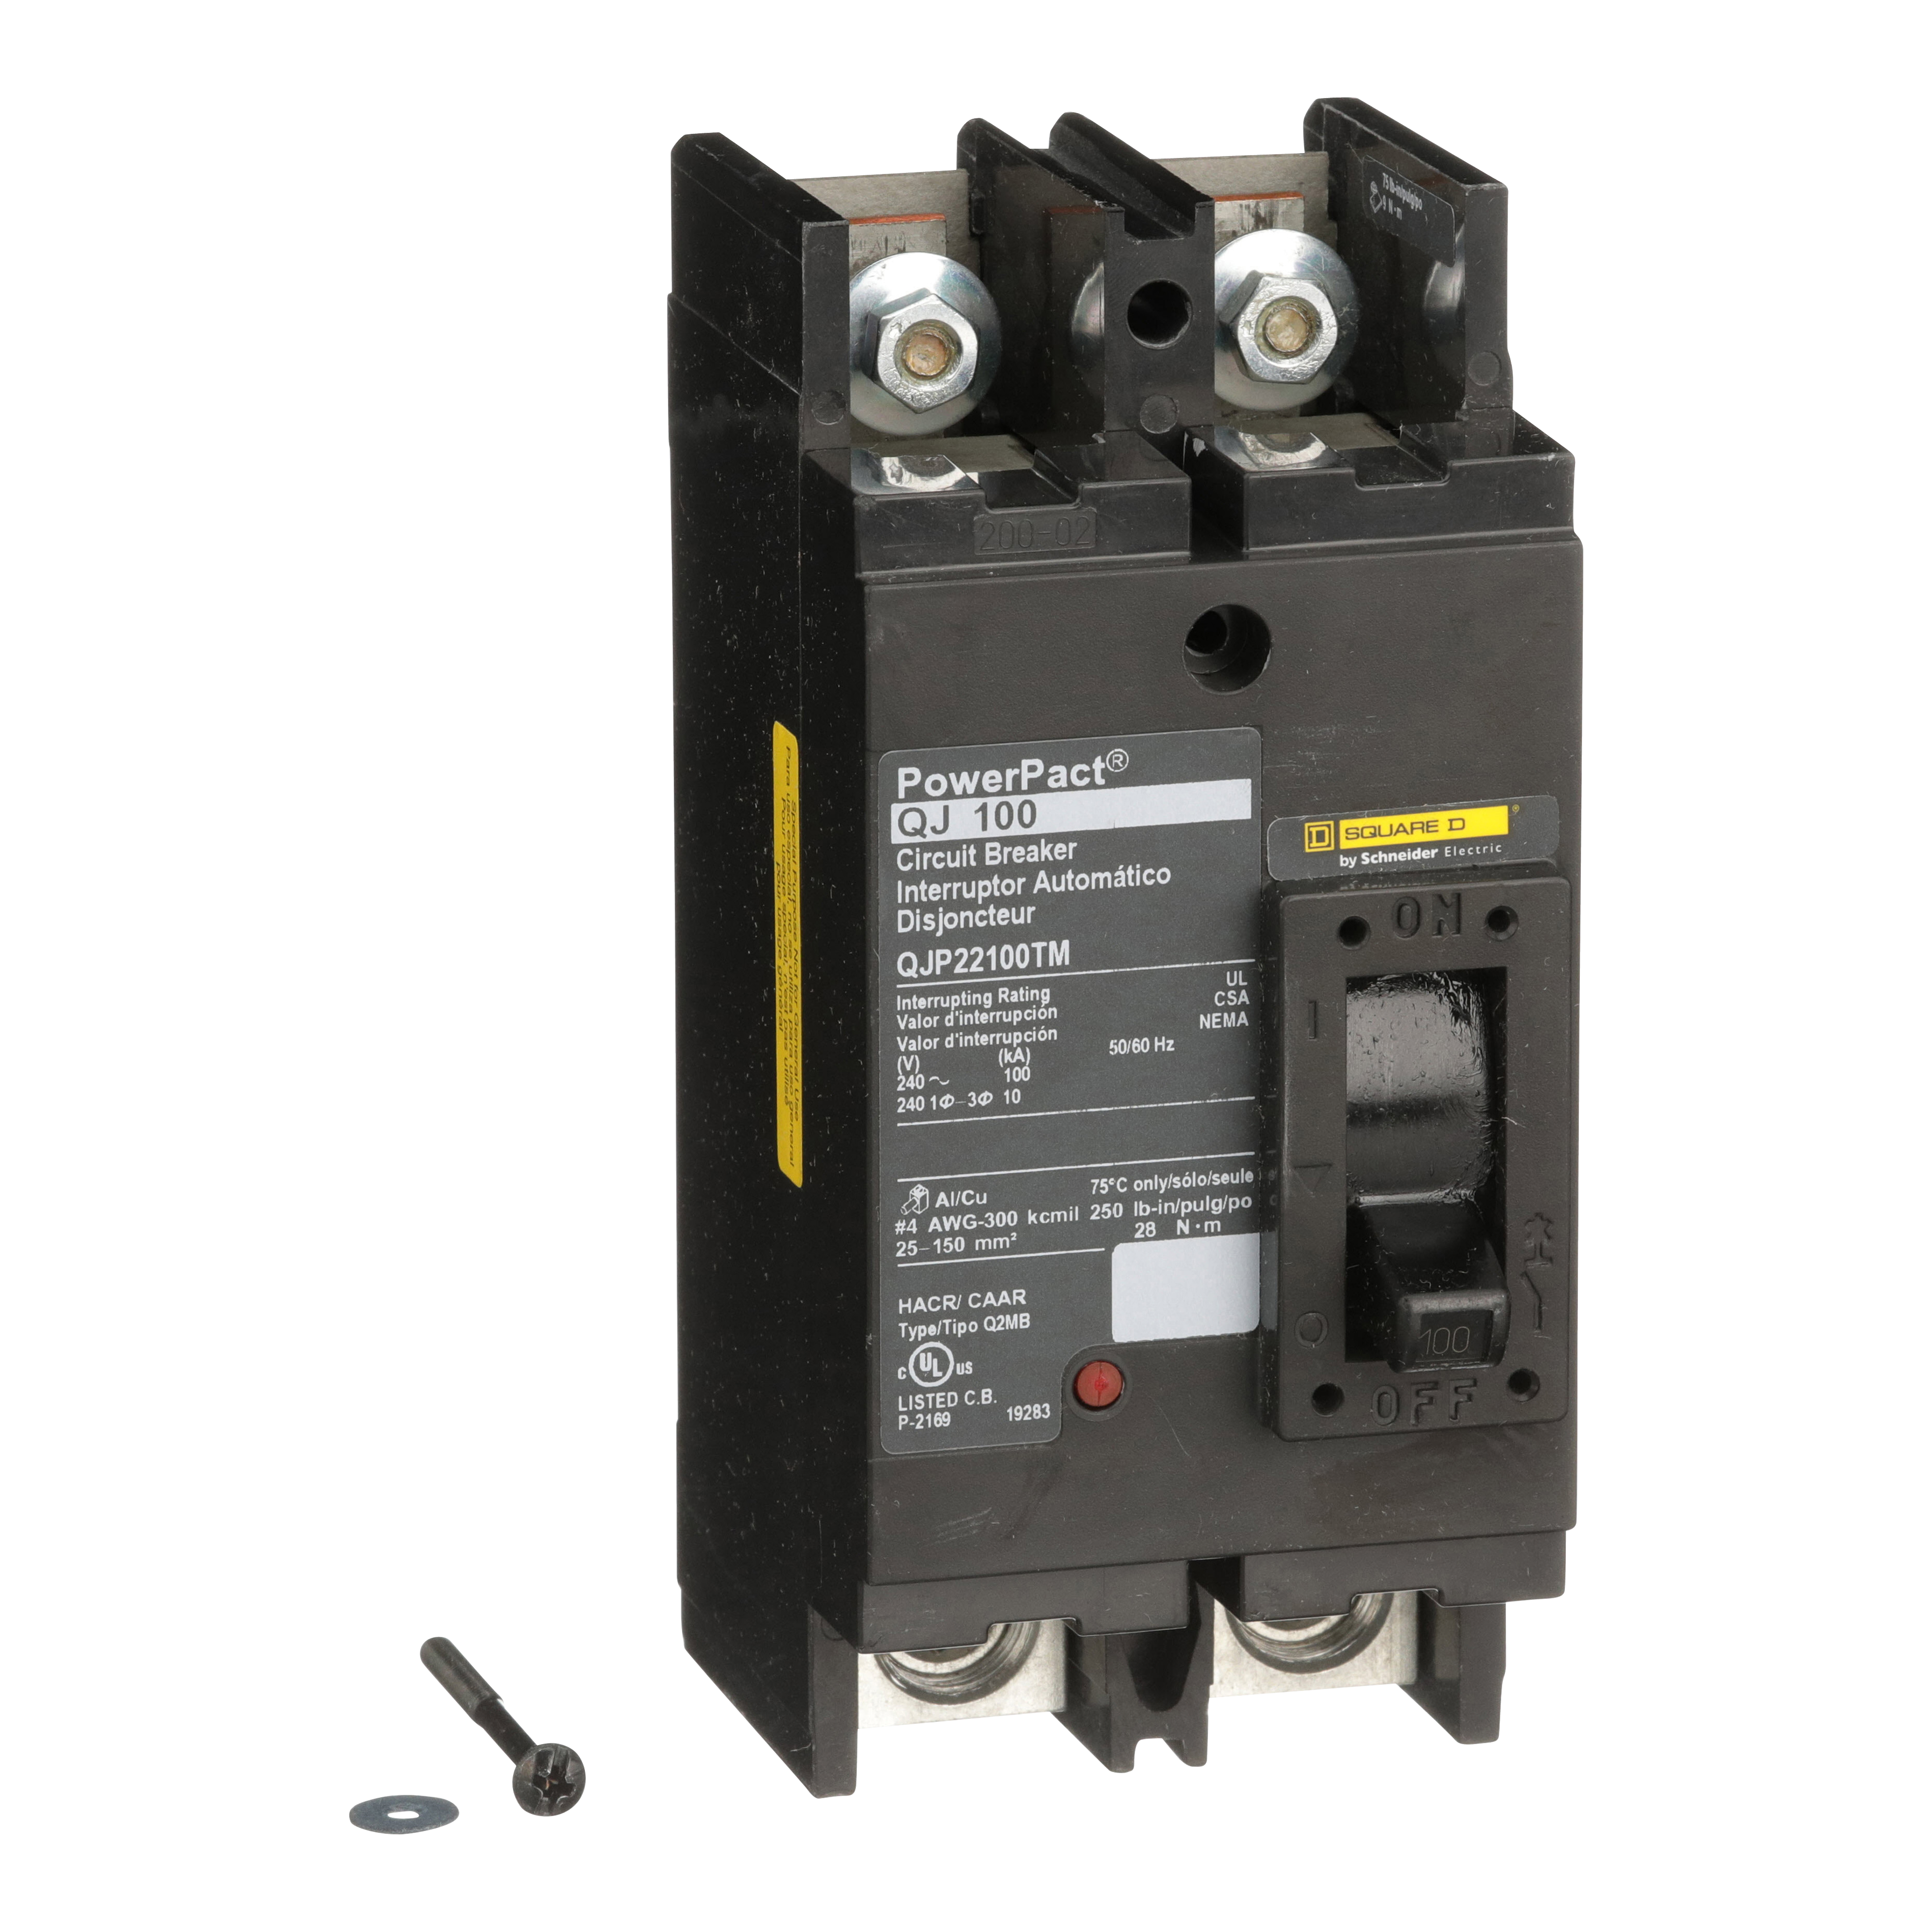 Circuit breaker, PowerPacT Q, 125A, 2 pole, 240VAC, 100kA, lugs, thermal magnetic, 80%, bottom of panel